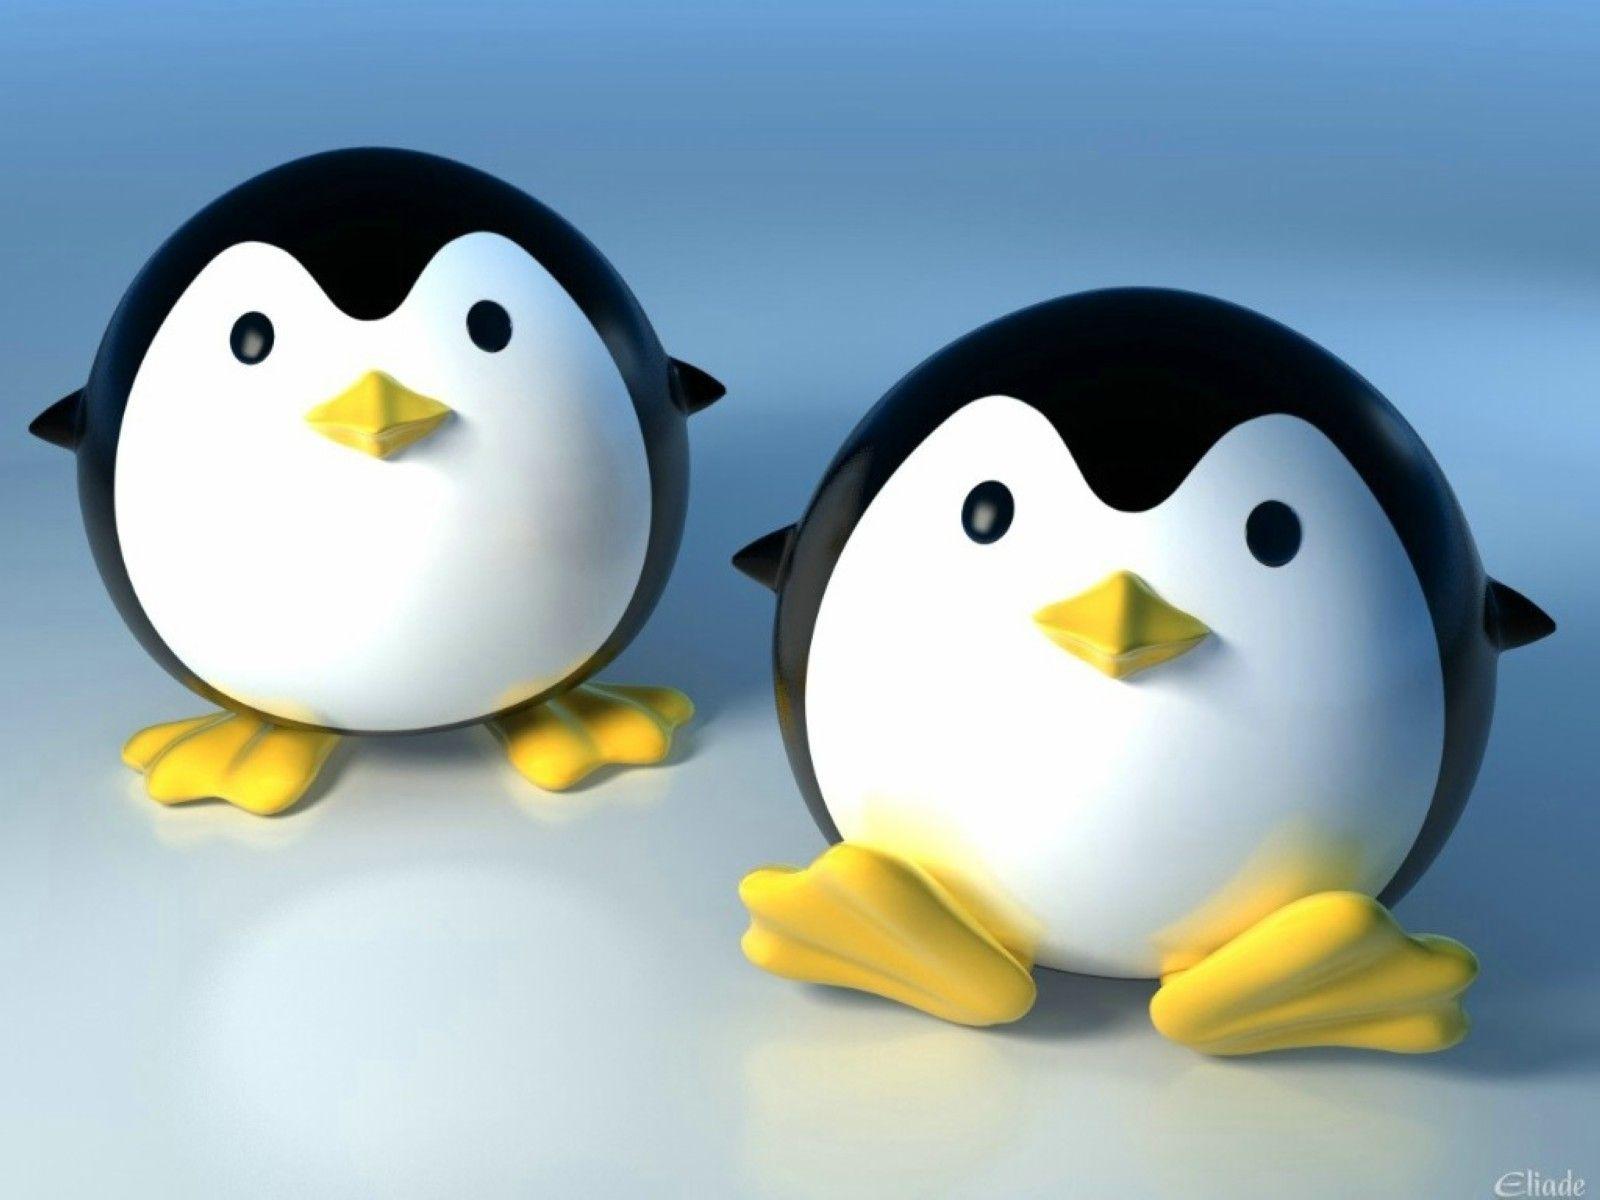 Cute Image Of Penguins